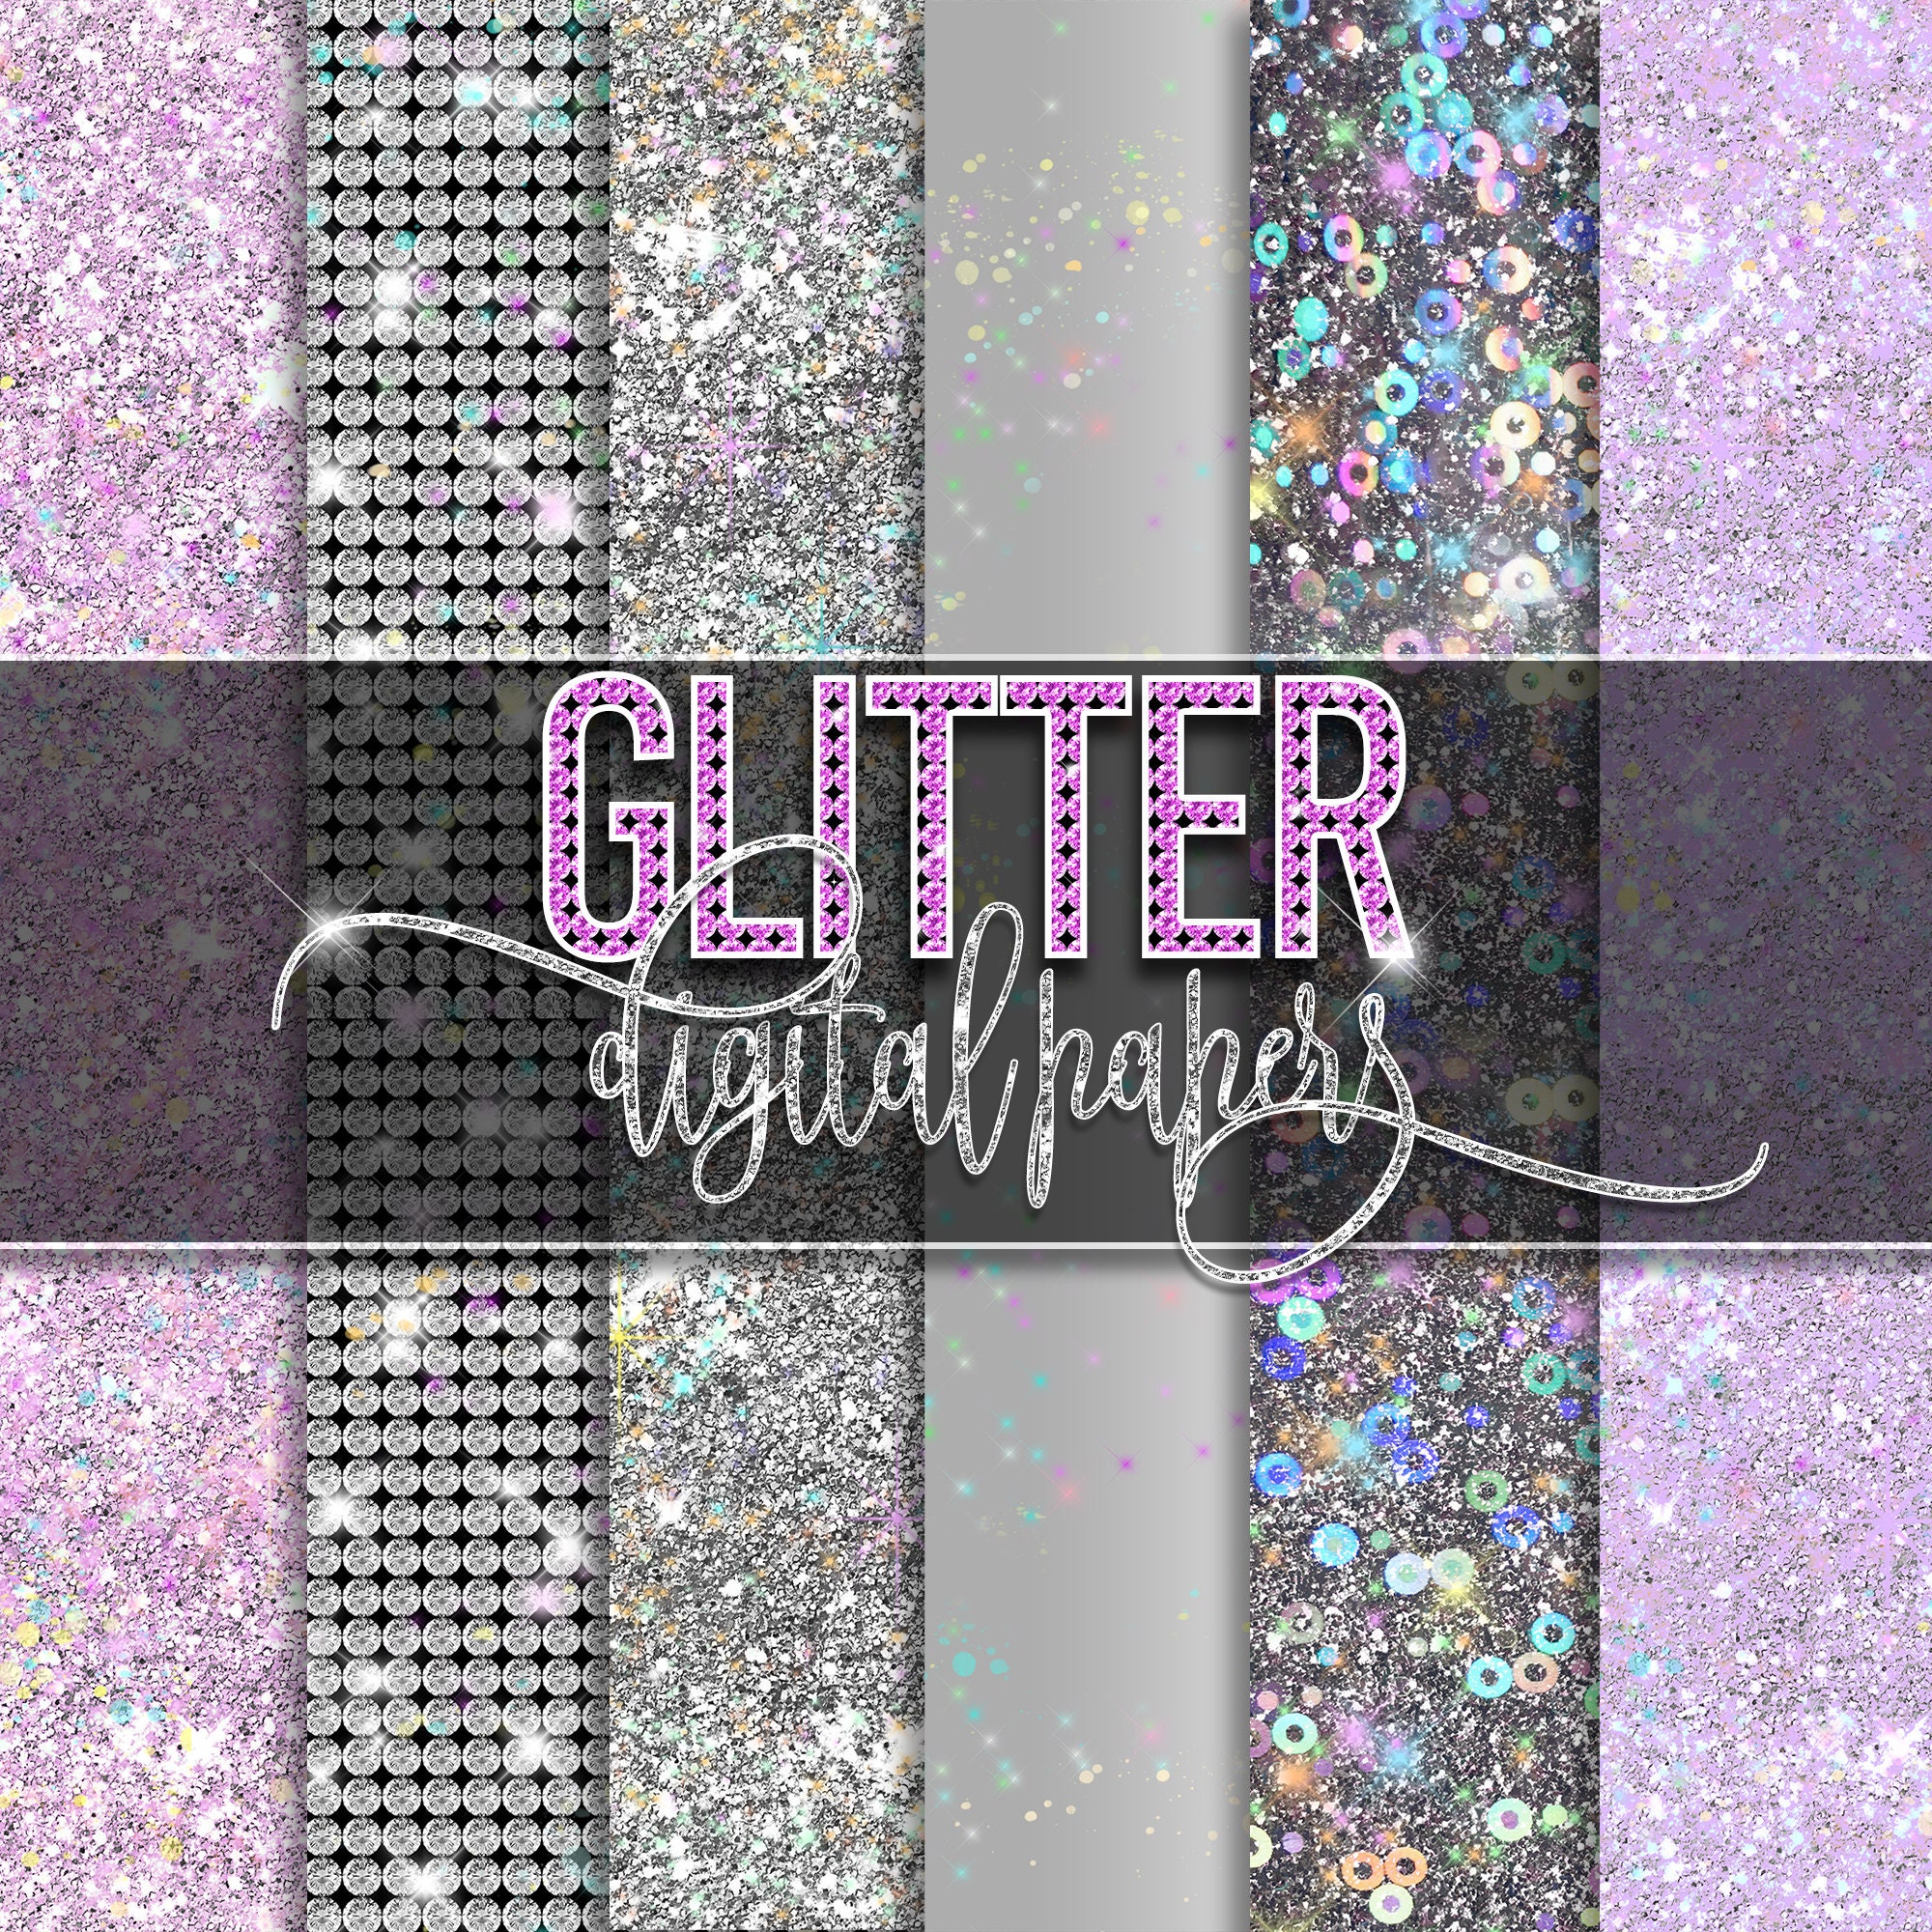 White Diamond Glitter Digital Paper Seamless Glam Diamond Sequin Textures  With Glitter White Digital Papers Glitter Textures 